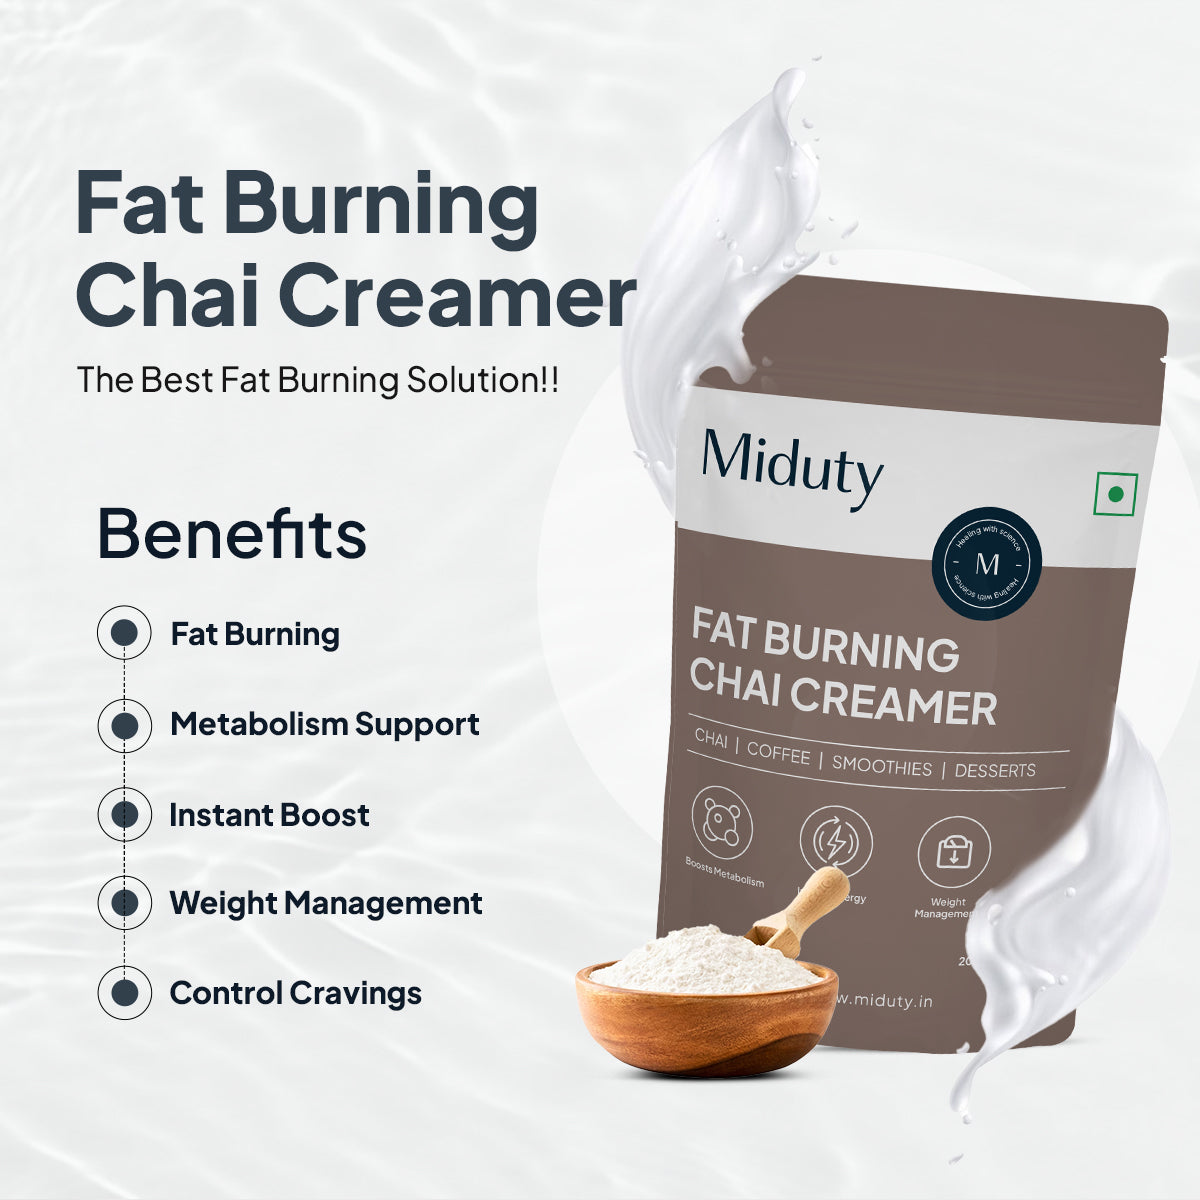 Fat Burning Chai Creamer